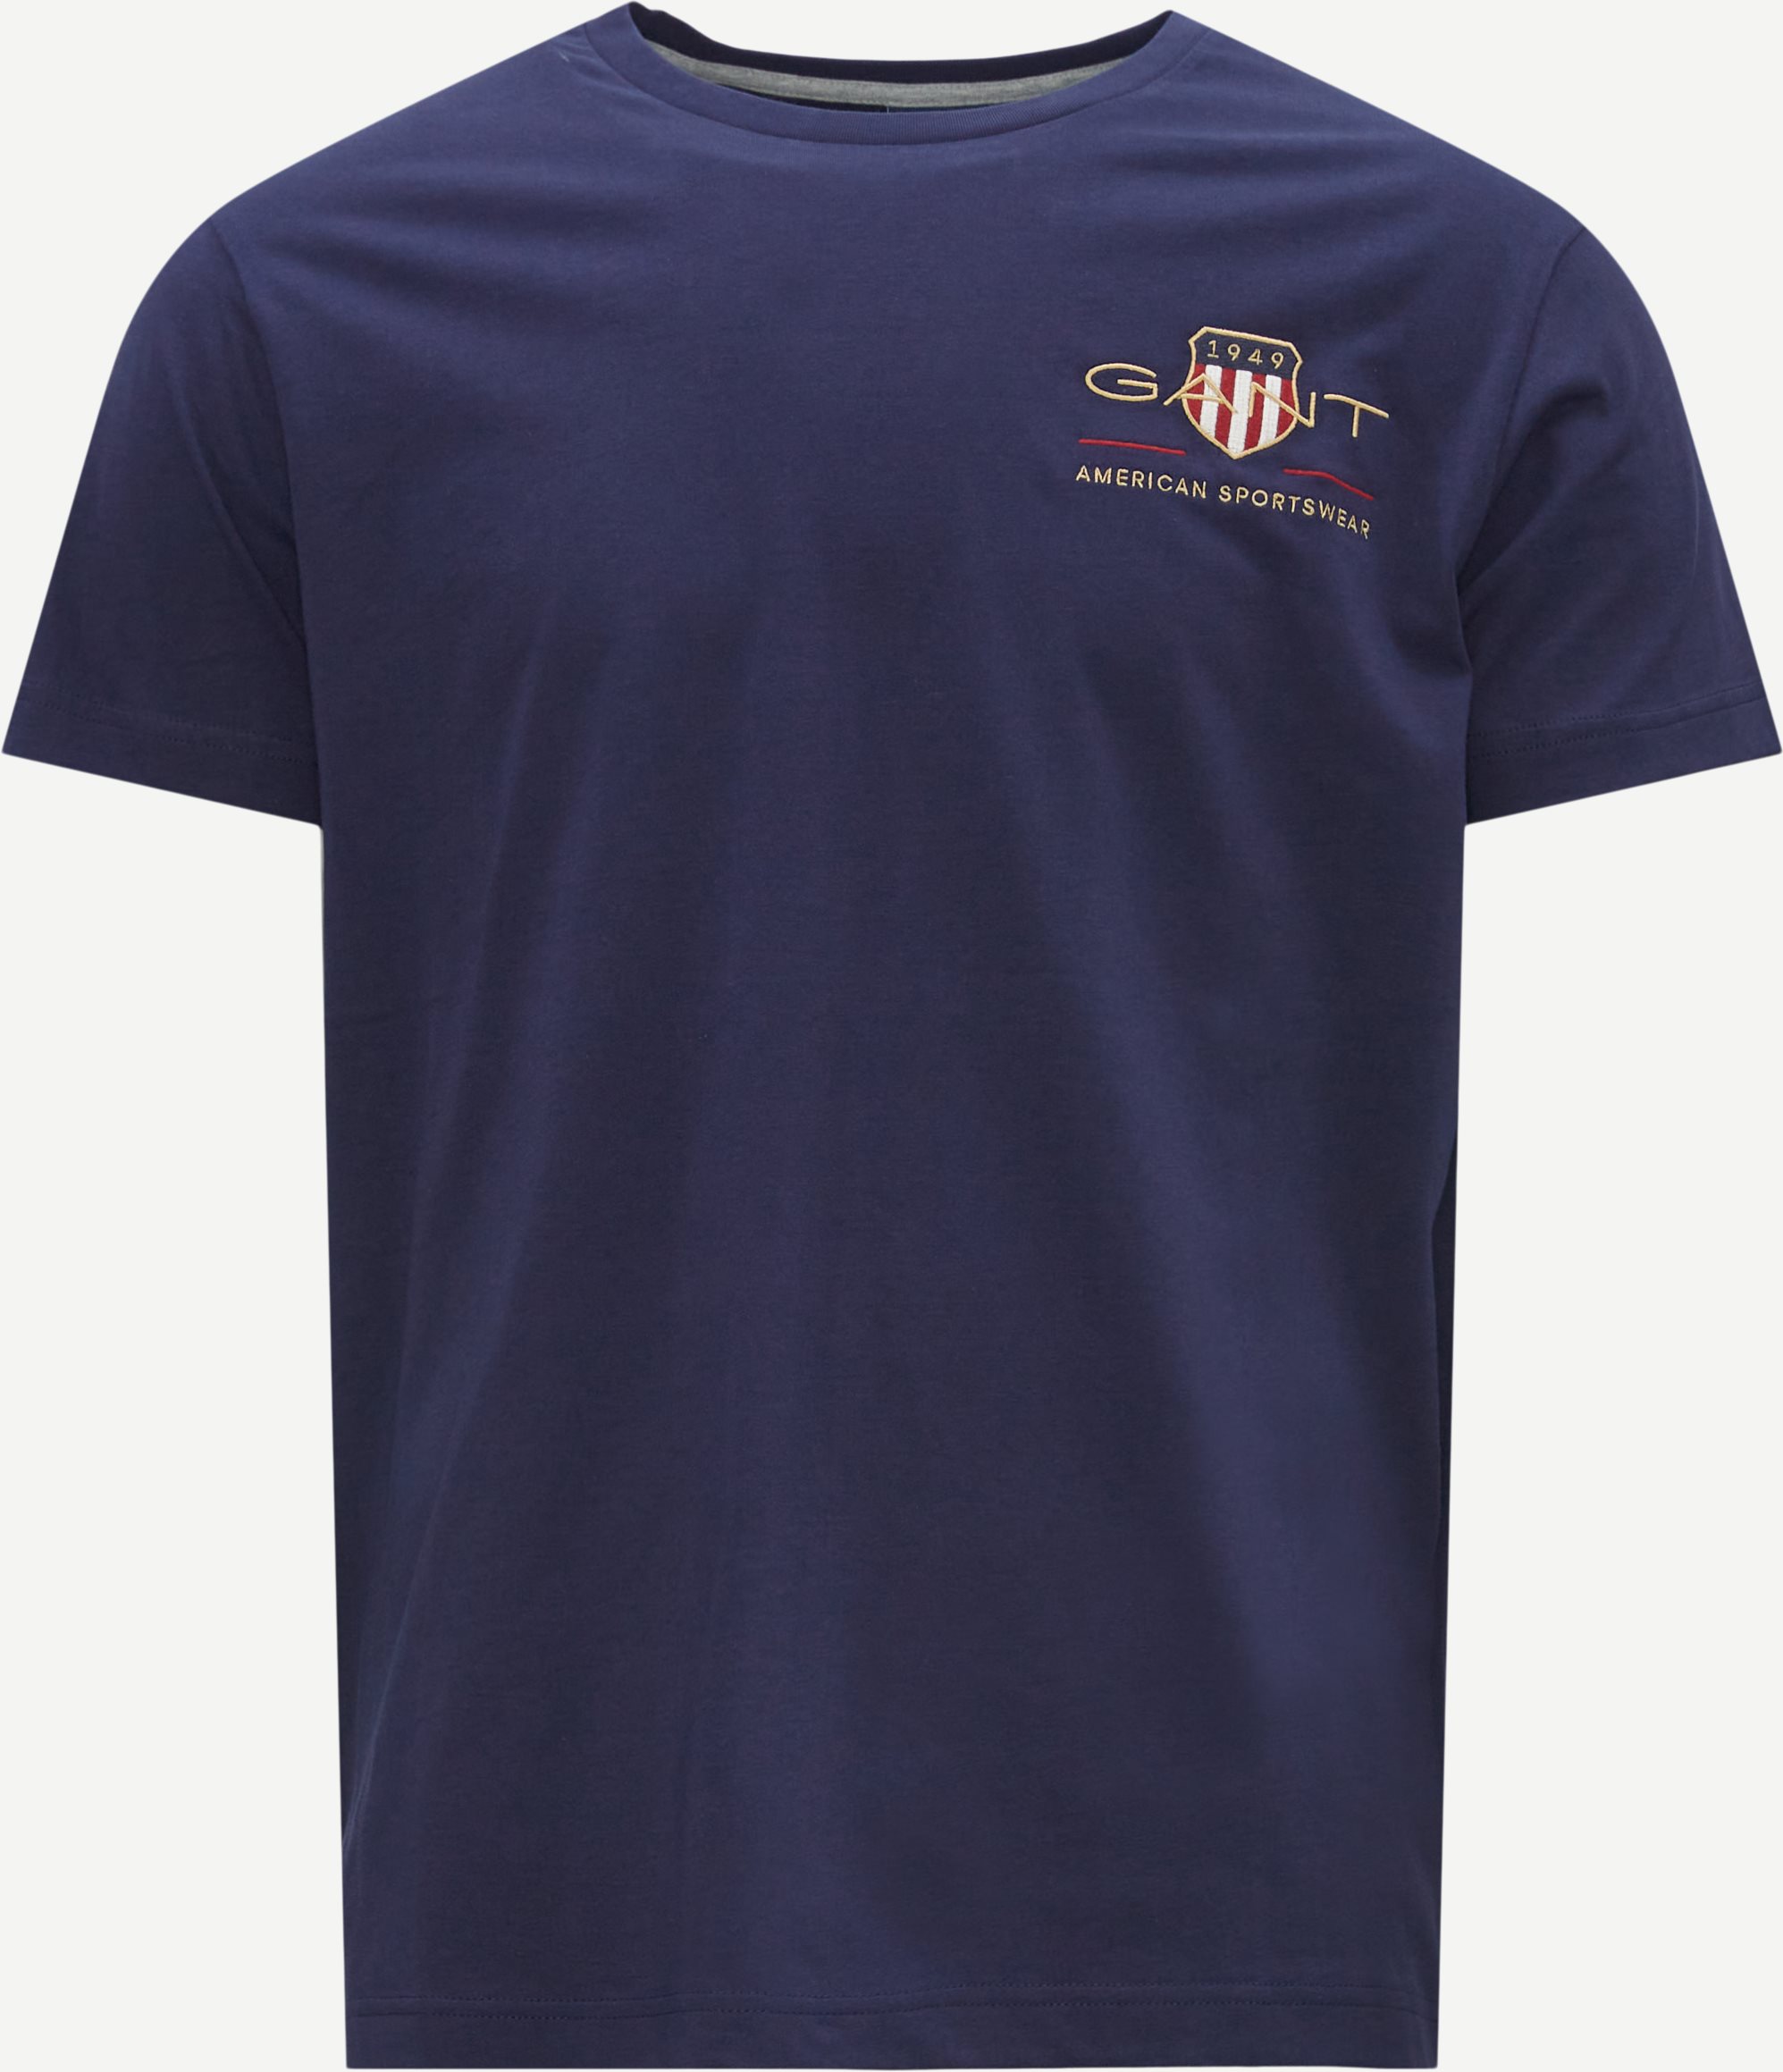 Archive Shield T-shirt - T-shirts - Regular fit - Blå